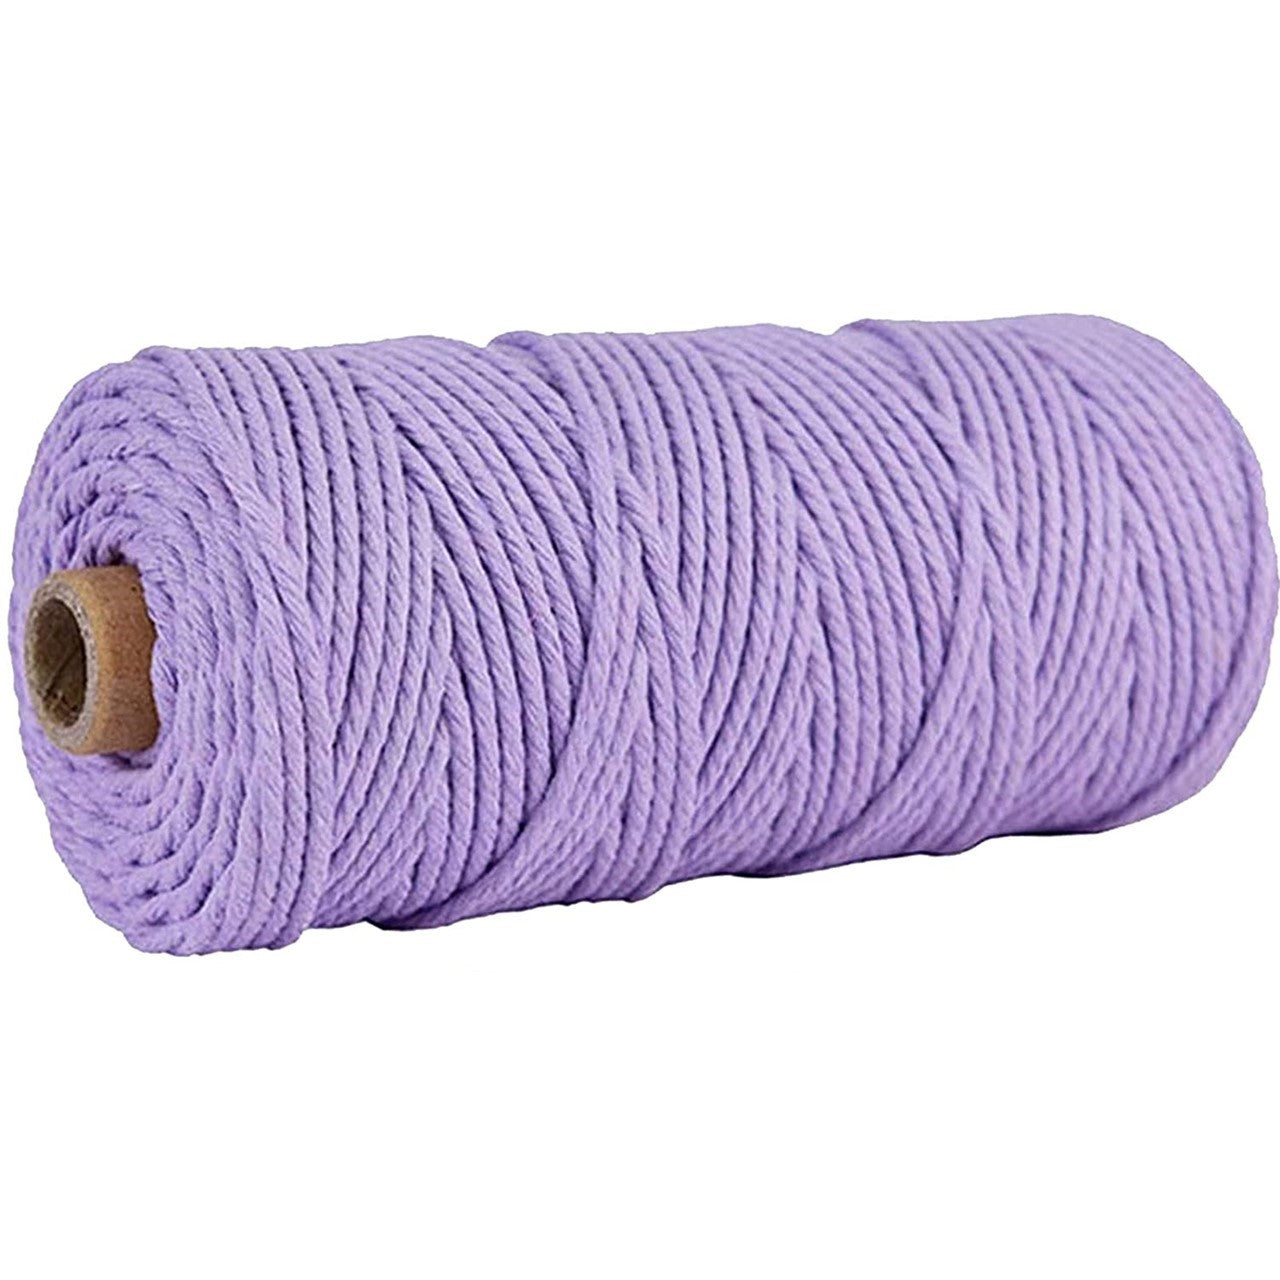 ecofynd Single String Light Violet Color Jute Cord Craft supplies freeshipping - Ecofynd